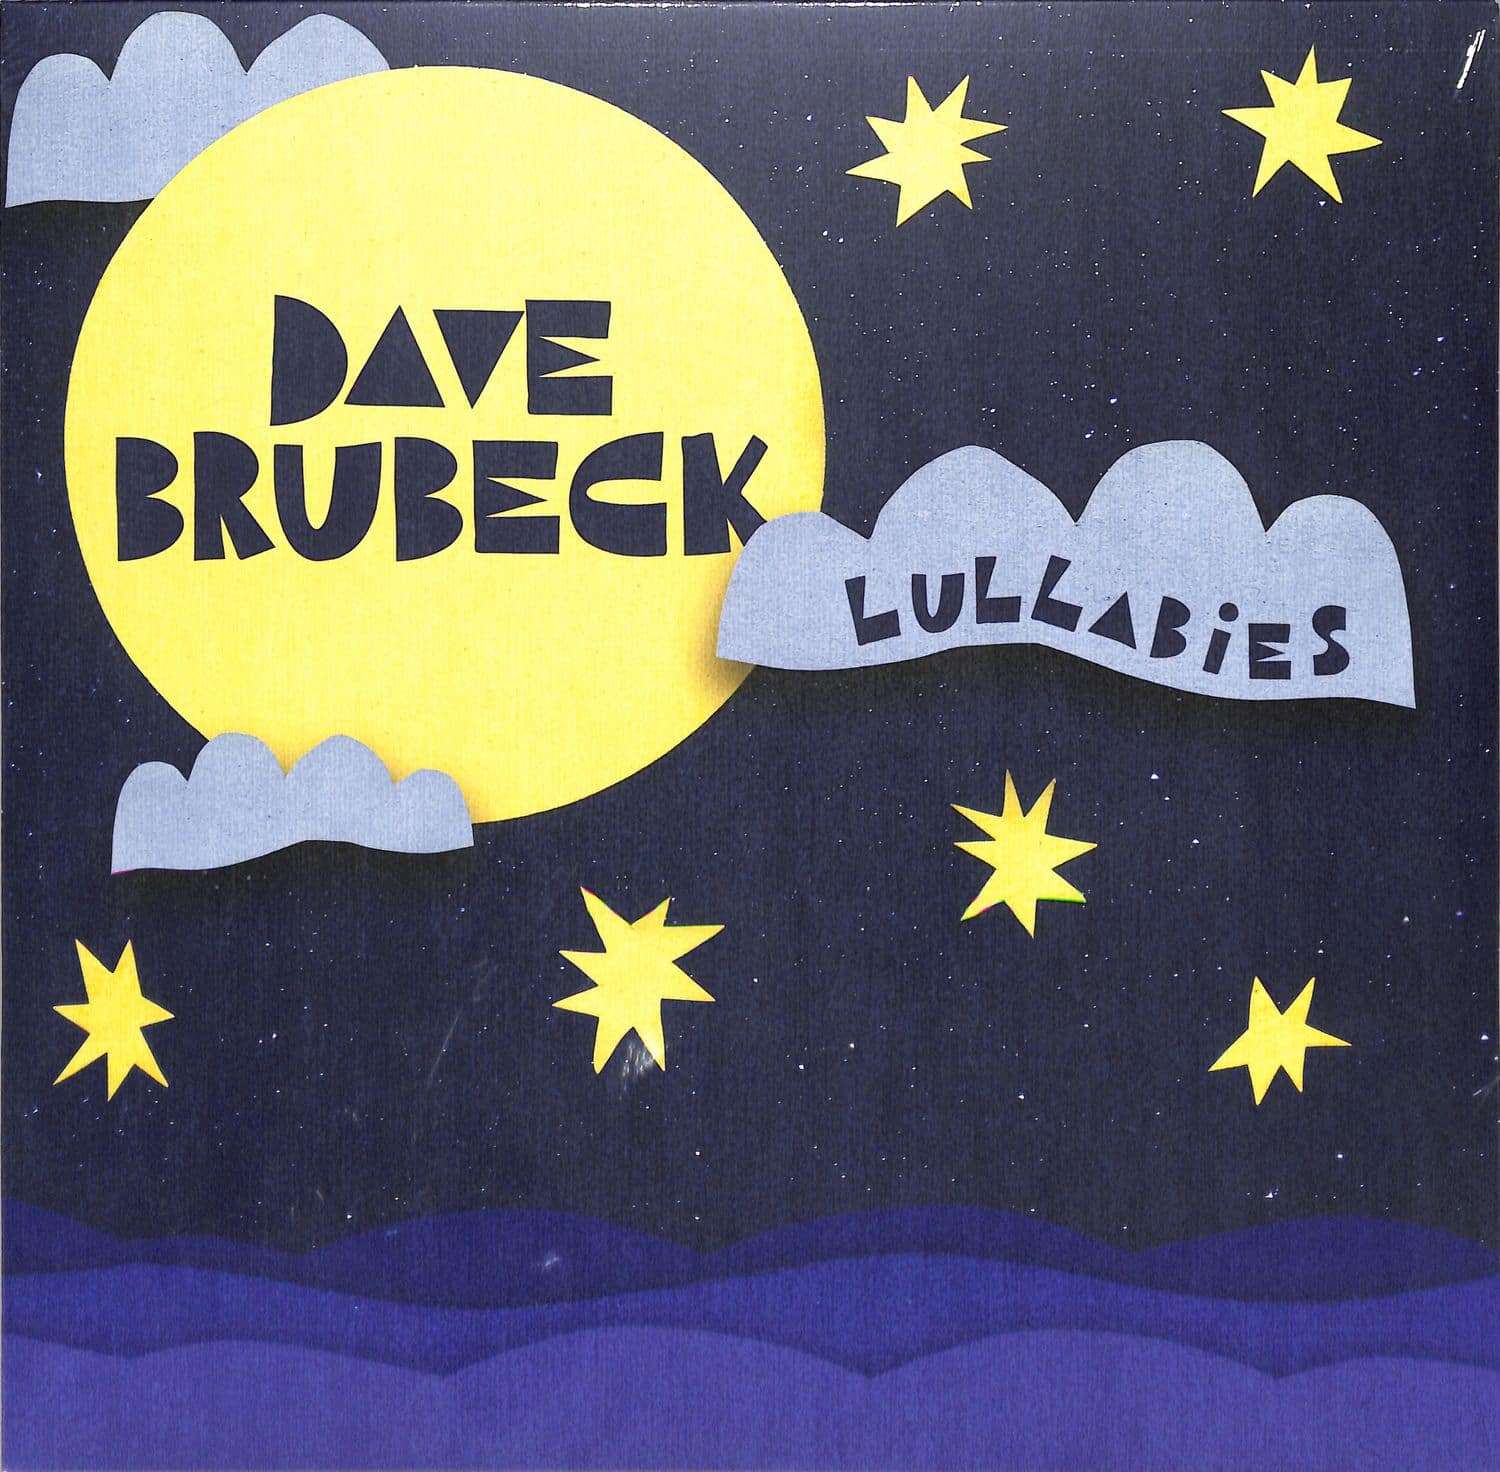 Dave Brubeck - LULLABIES 